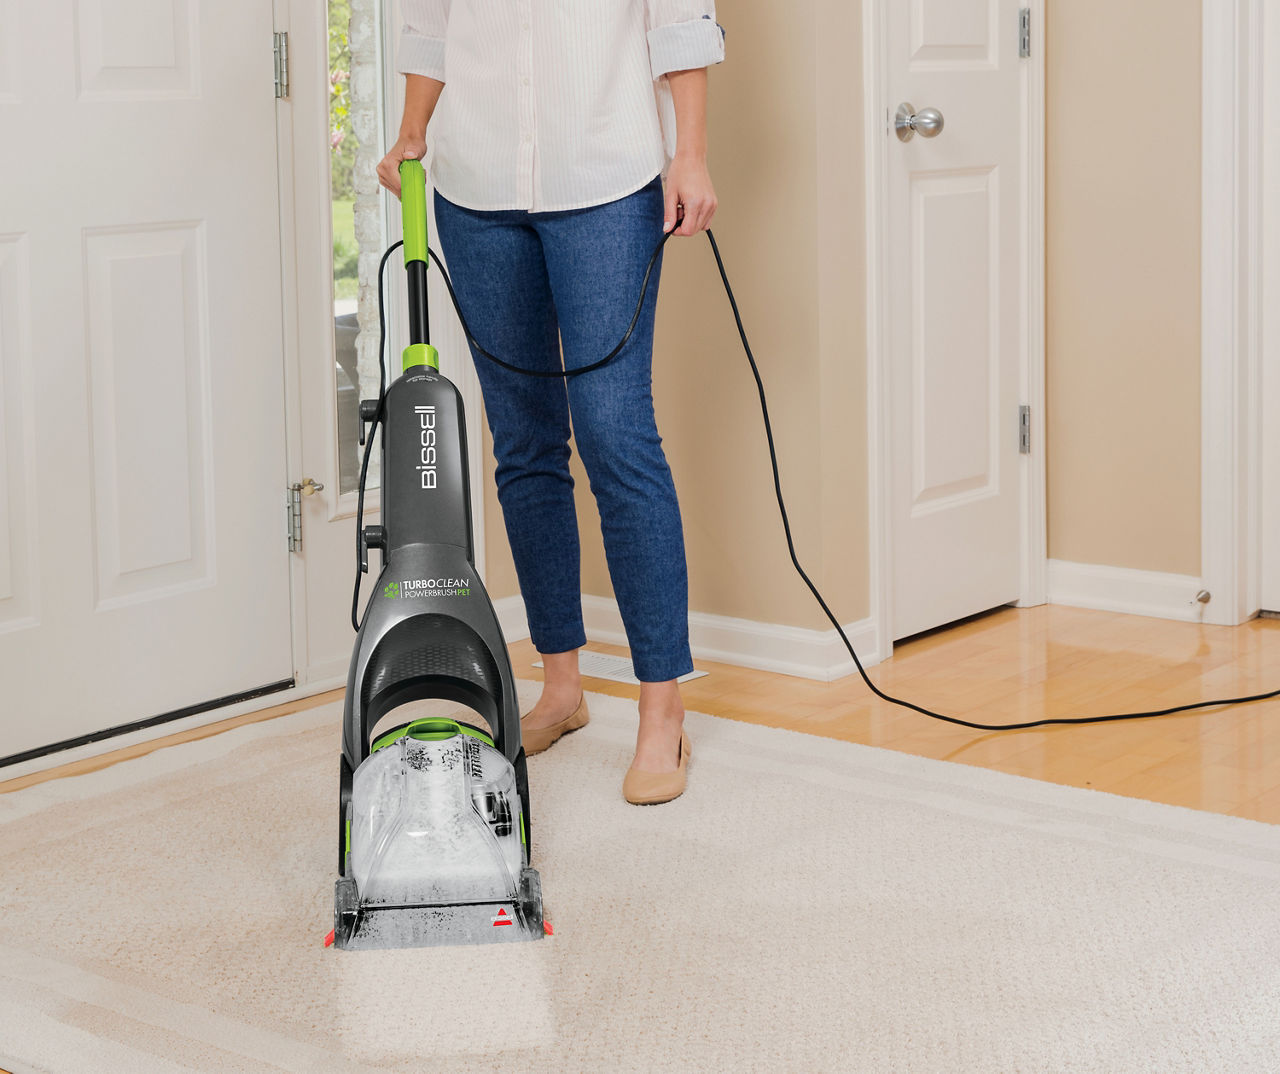 BISSELL, TurboClean PowerBrush Pet Carpet Steam Cleaner - Zola